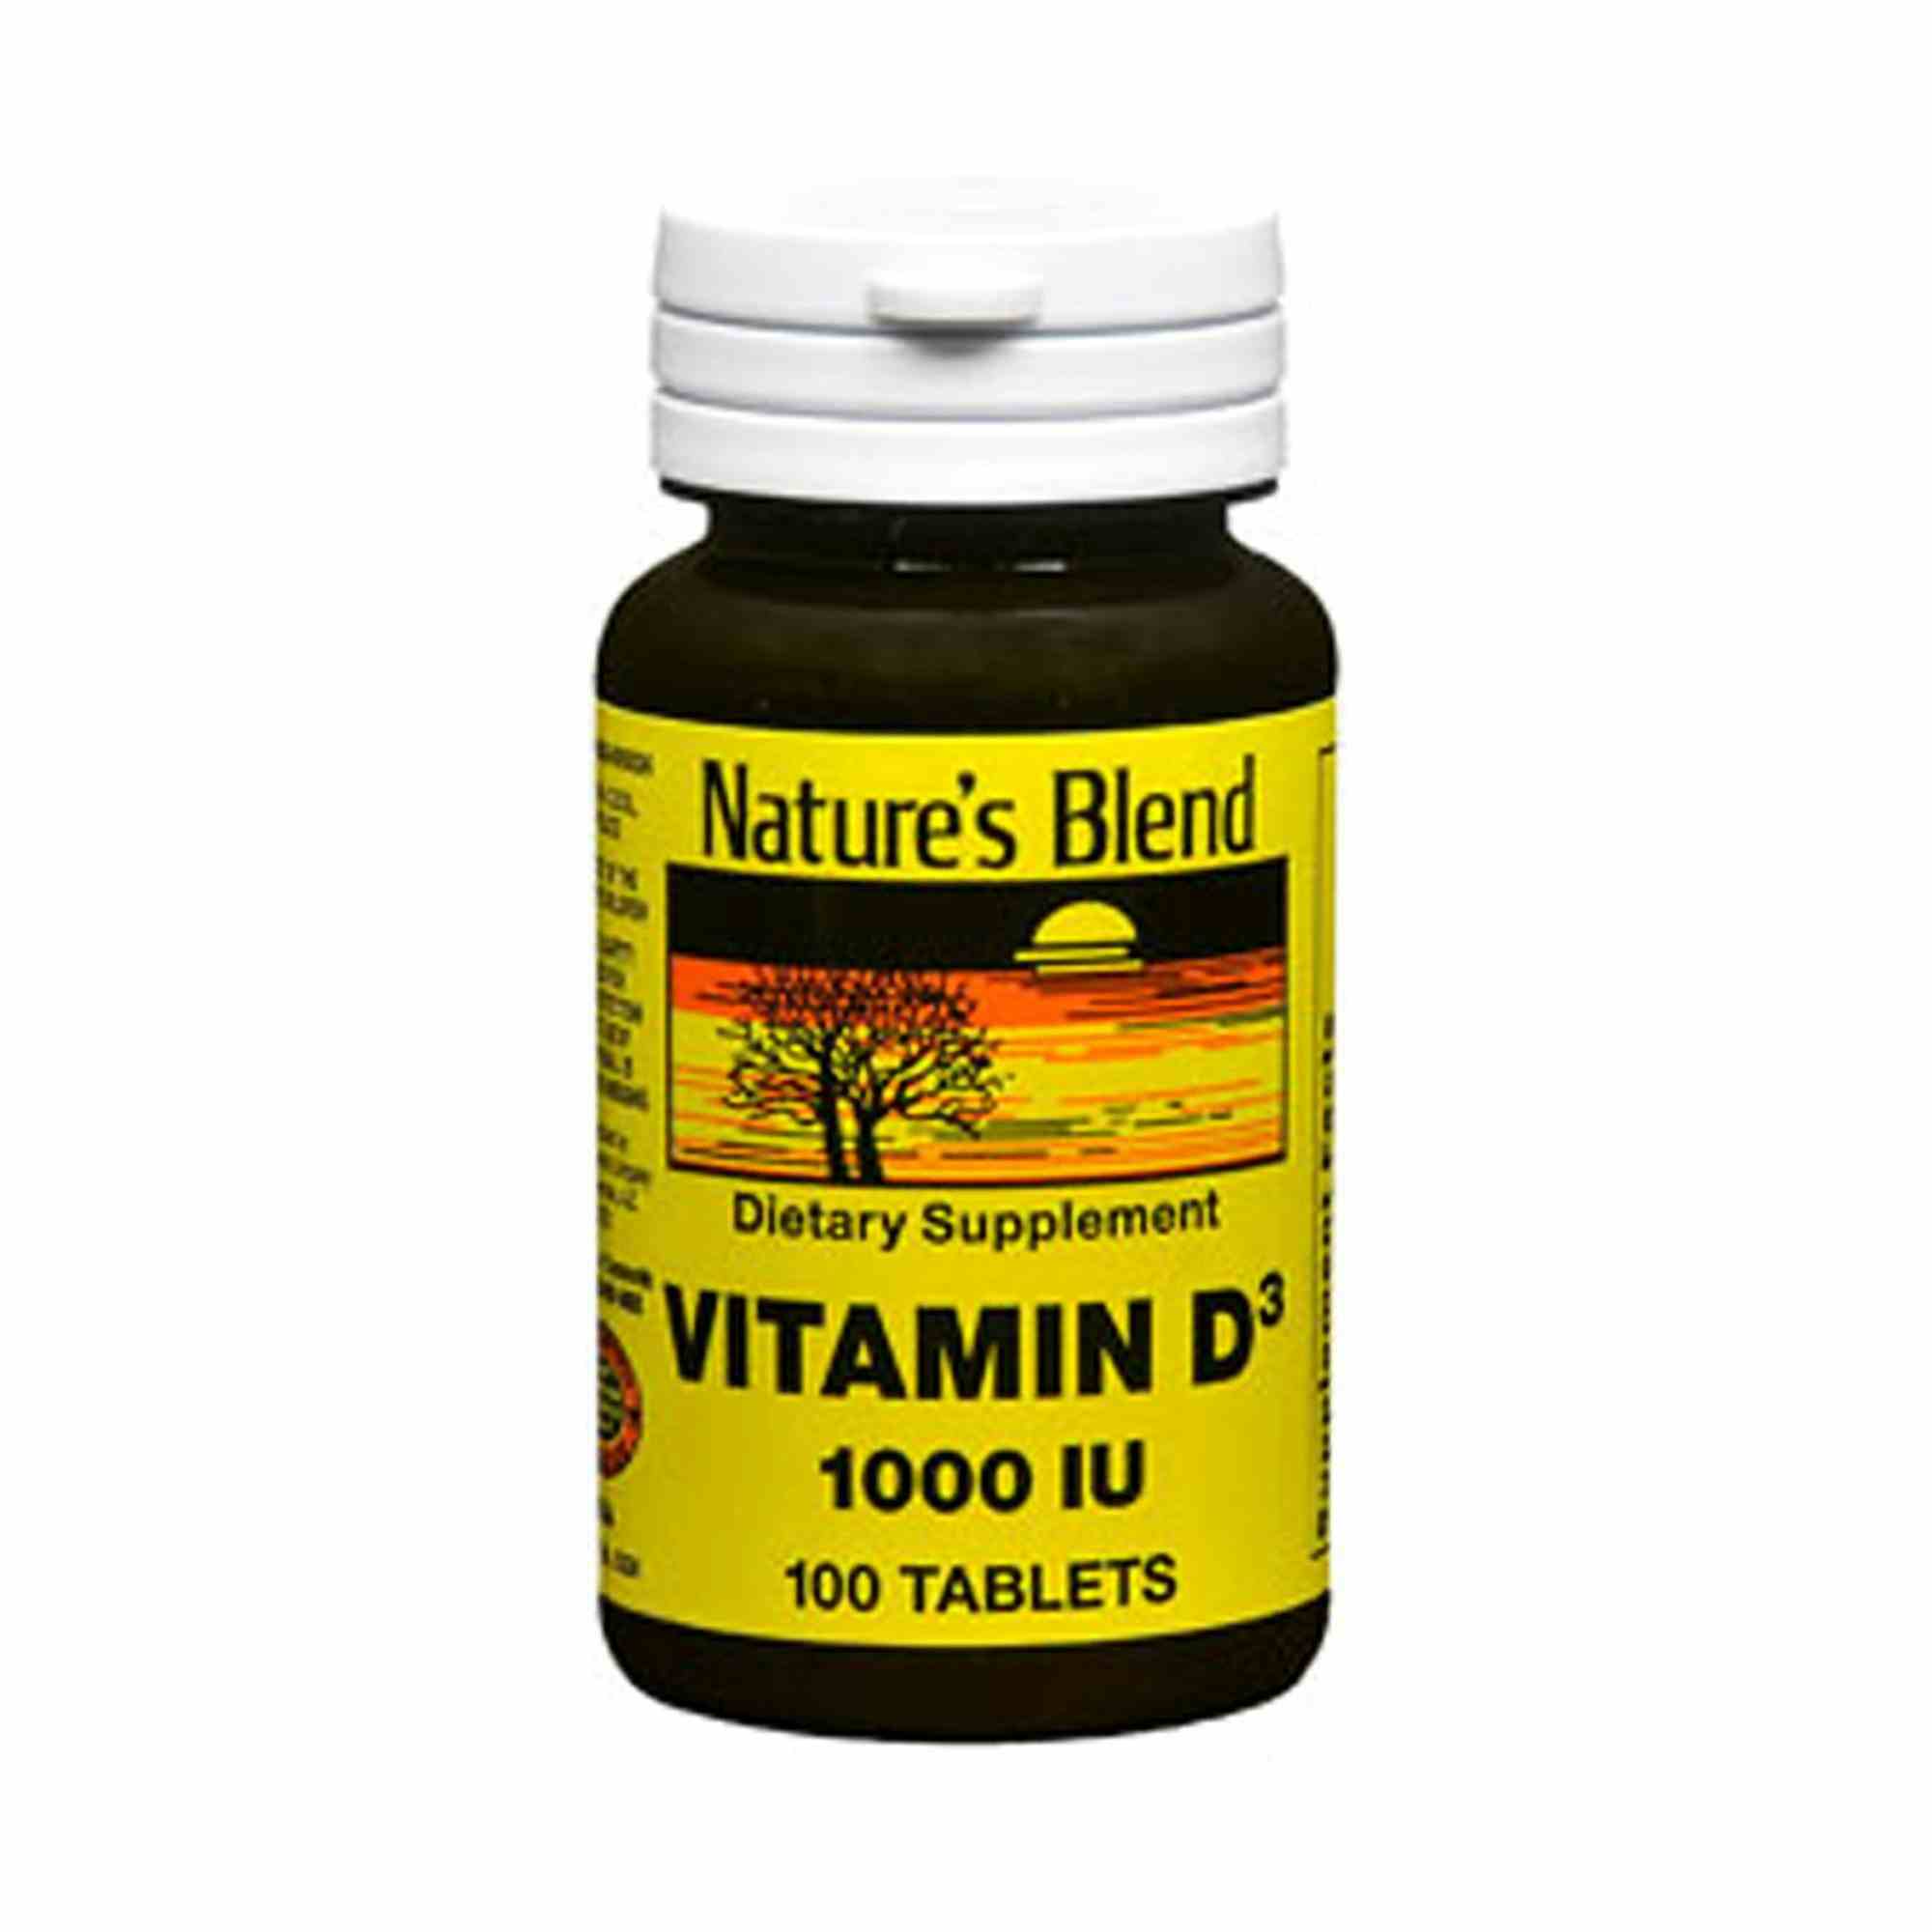 Nature's Blend Vitamin D3 Supplement, 54629041120, 2000 IU - Bottle of 100 Tablets